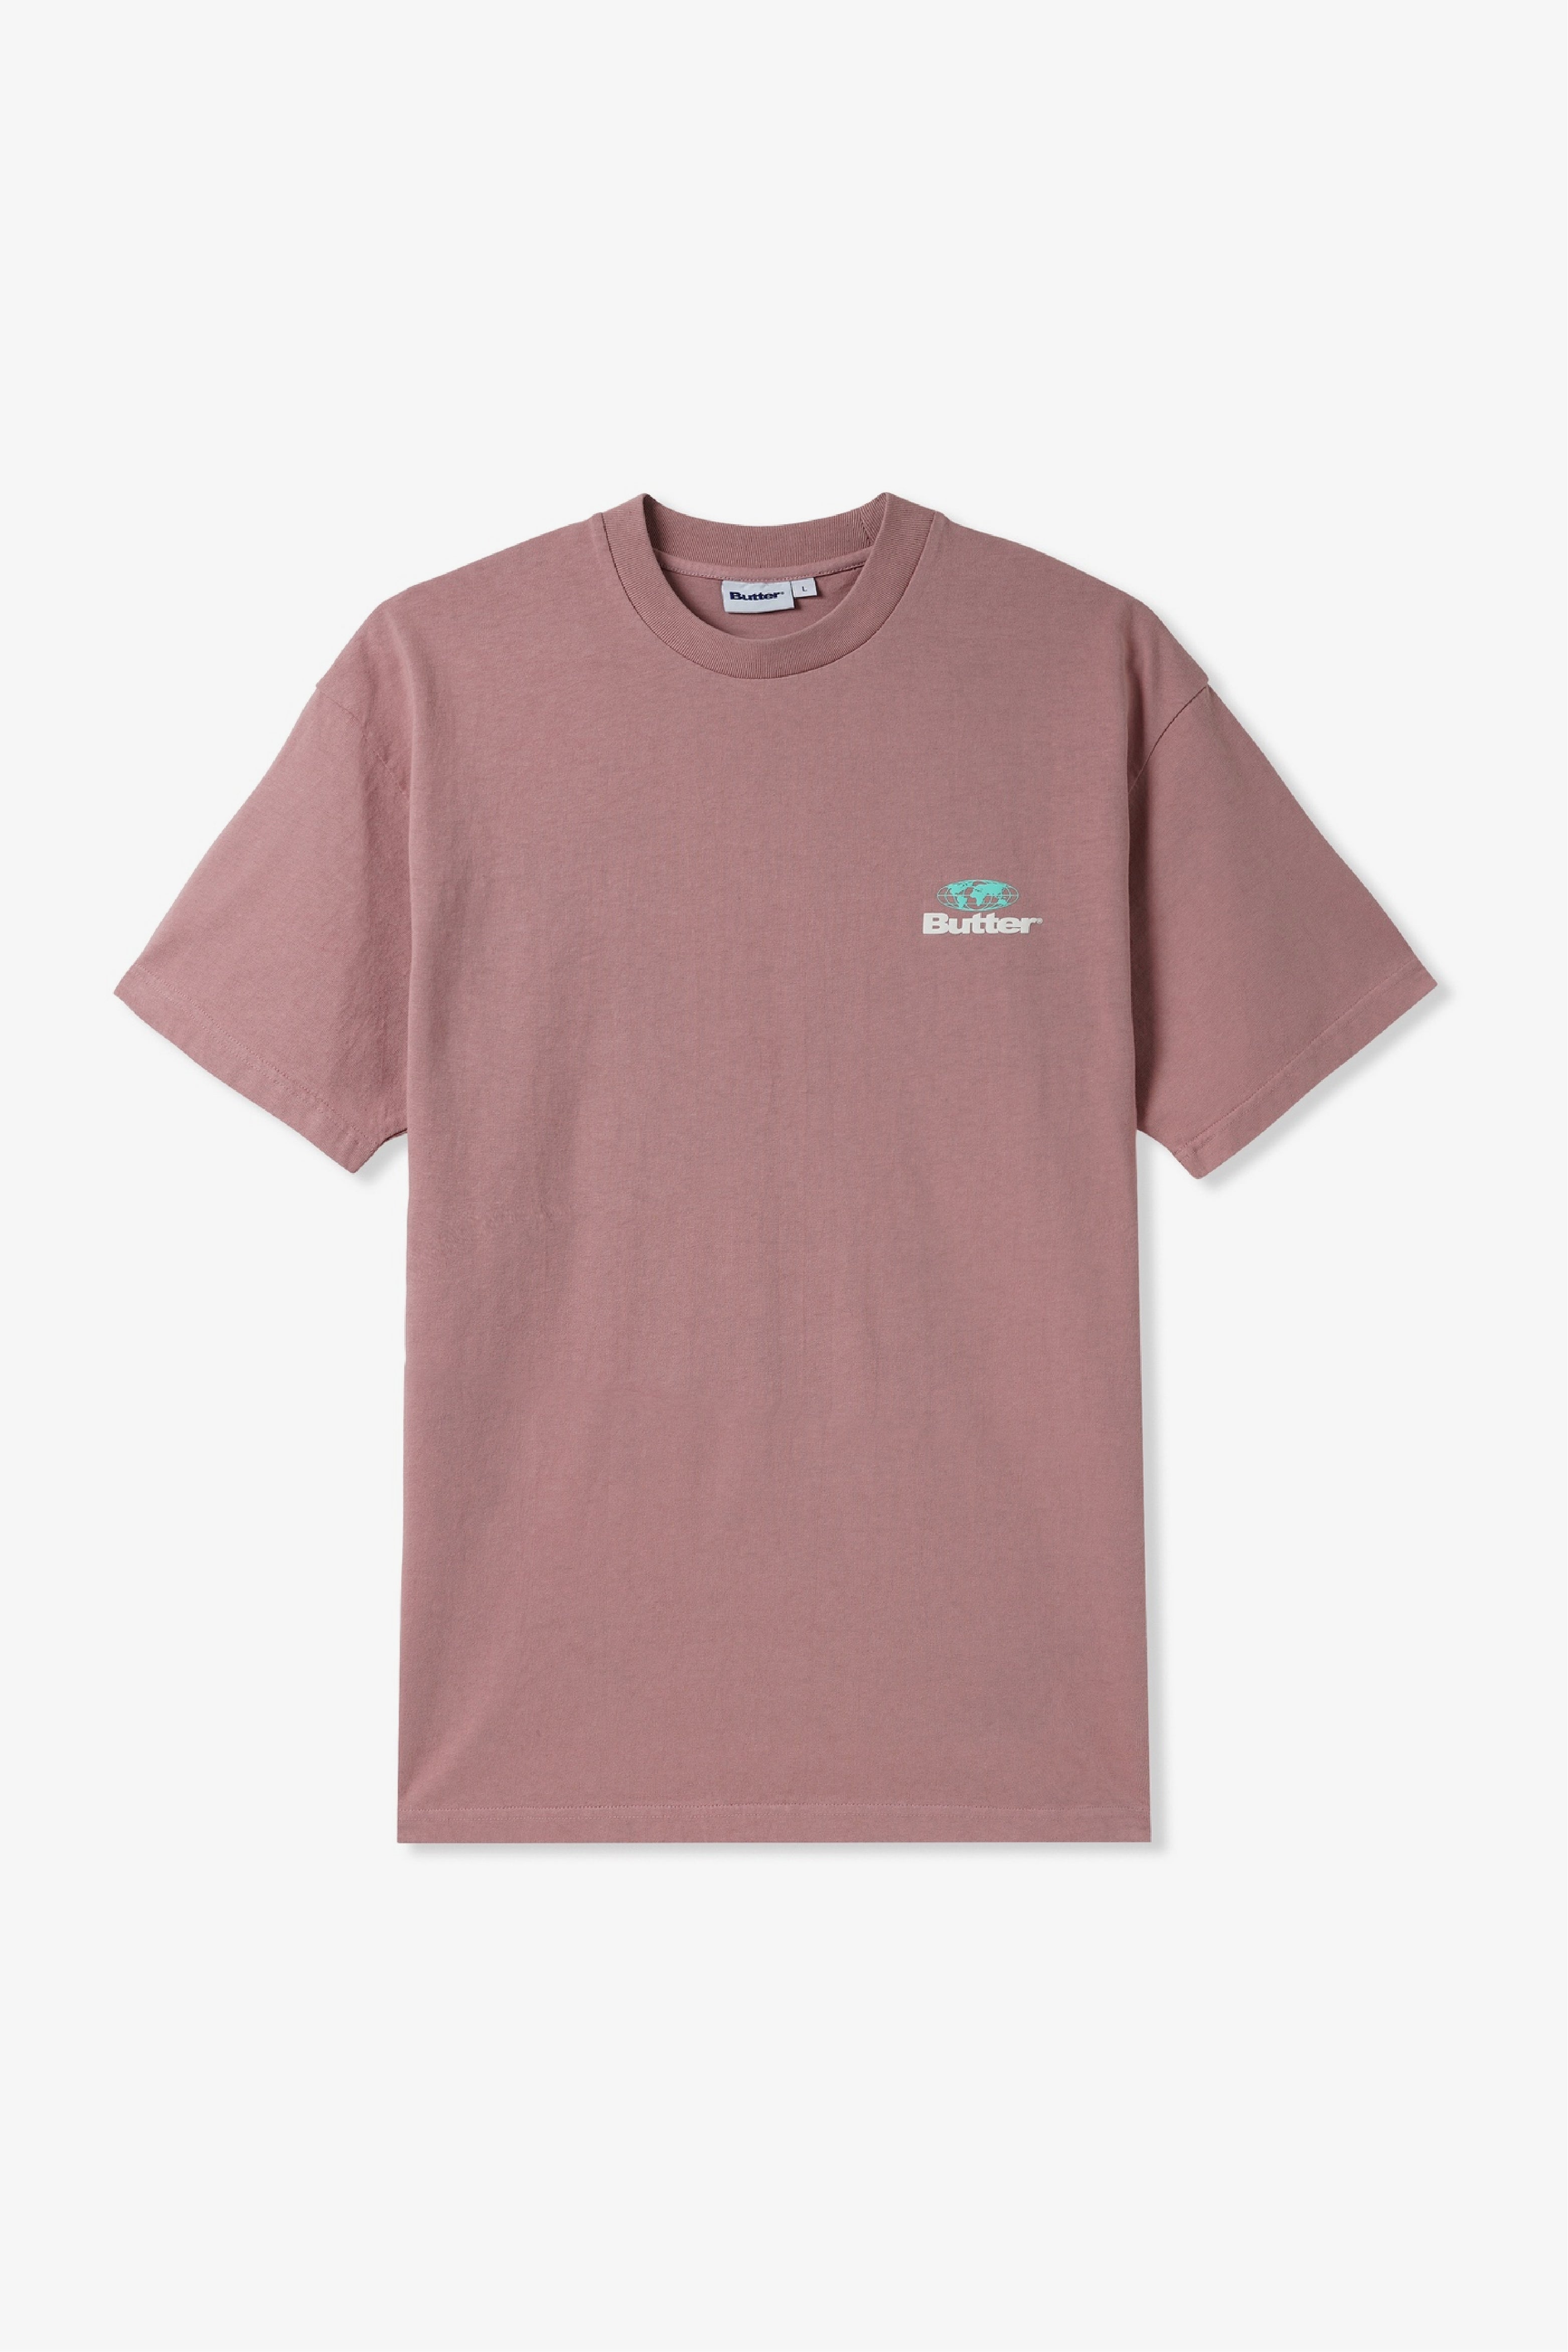 Selectshop FRAME - BUTTER GOODS Heavy Pigment Dye Tee T-Shirts Dubai